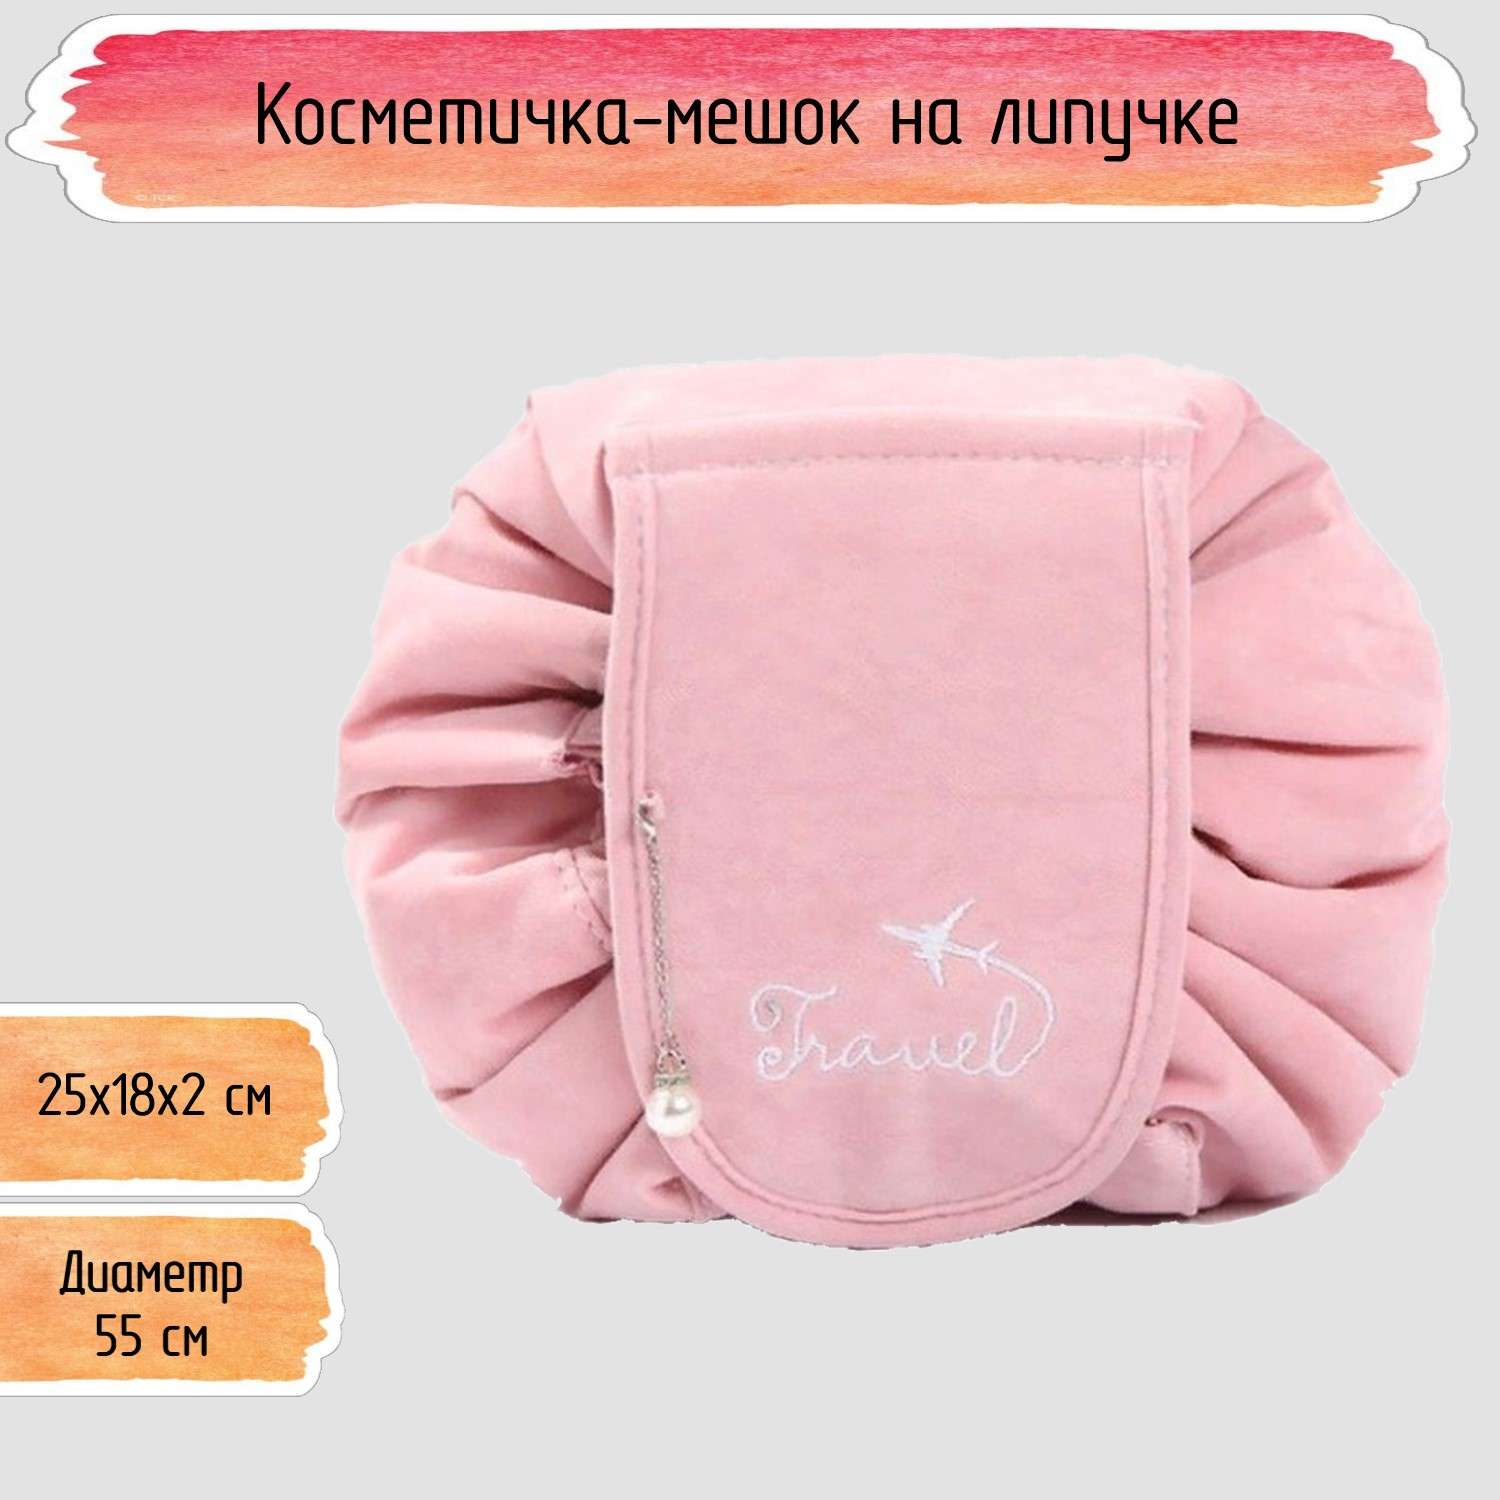 Косметичка-мешок на липучке Seichi бархатная светло-розовая - фото 1